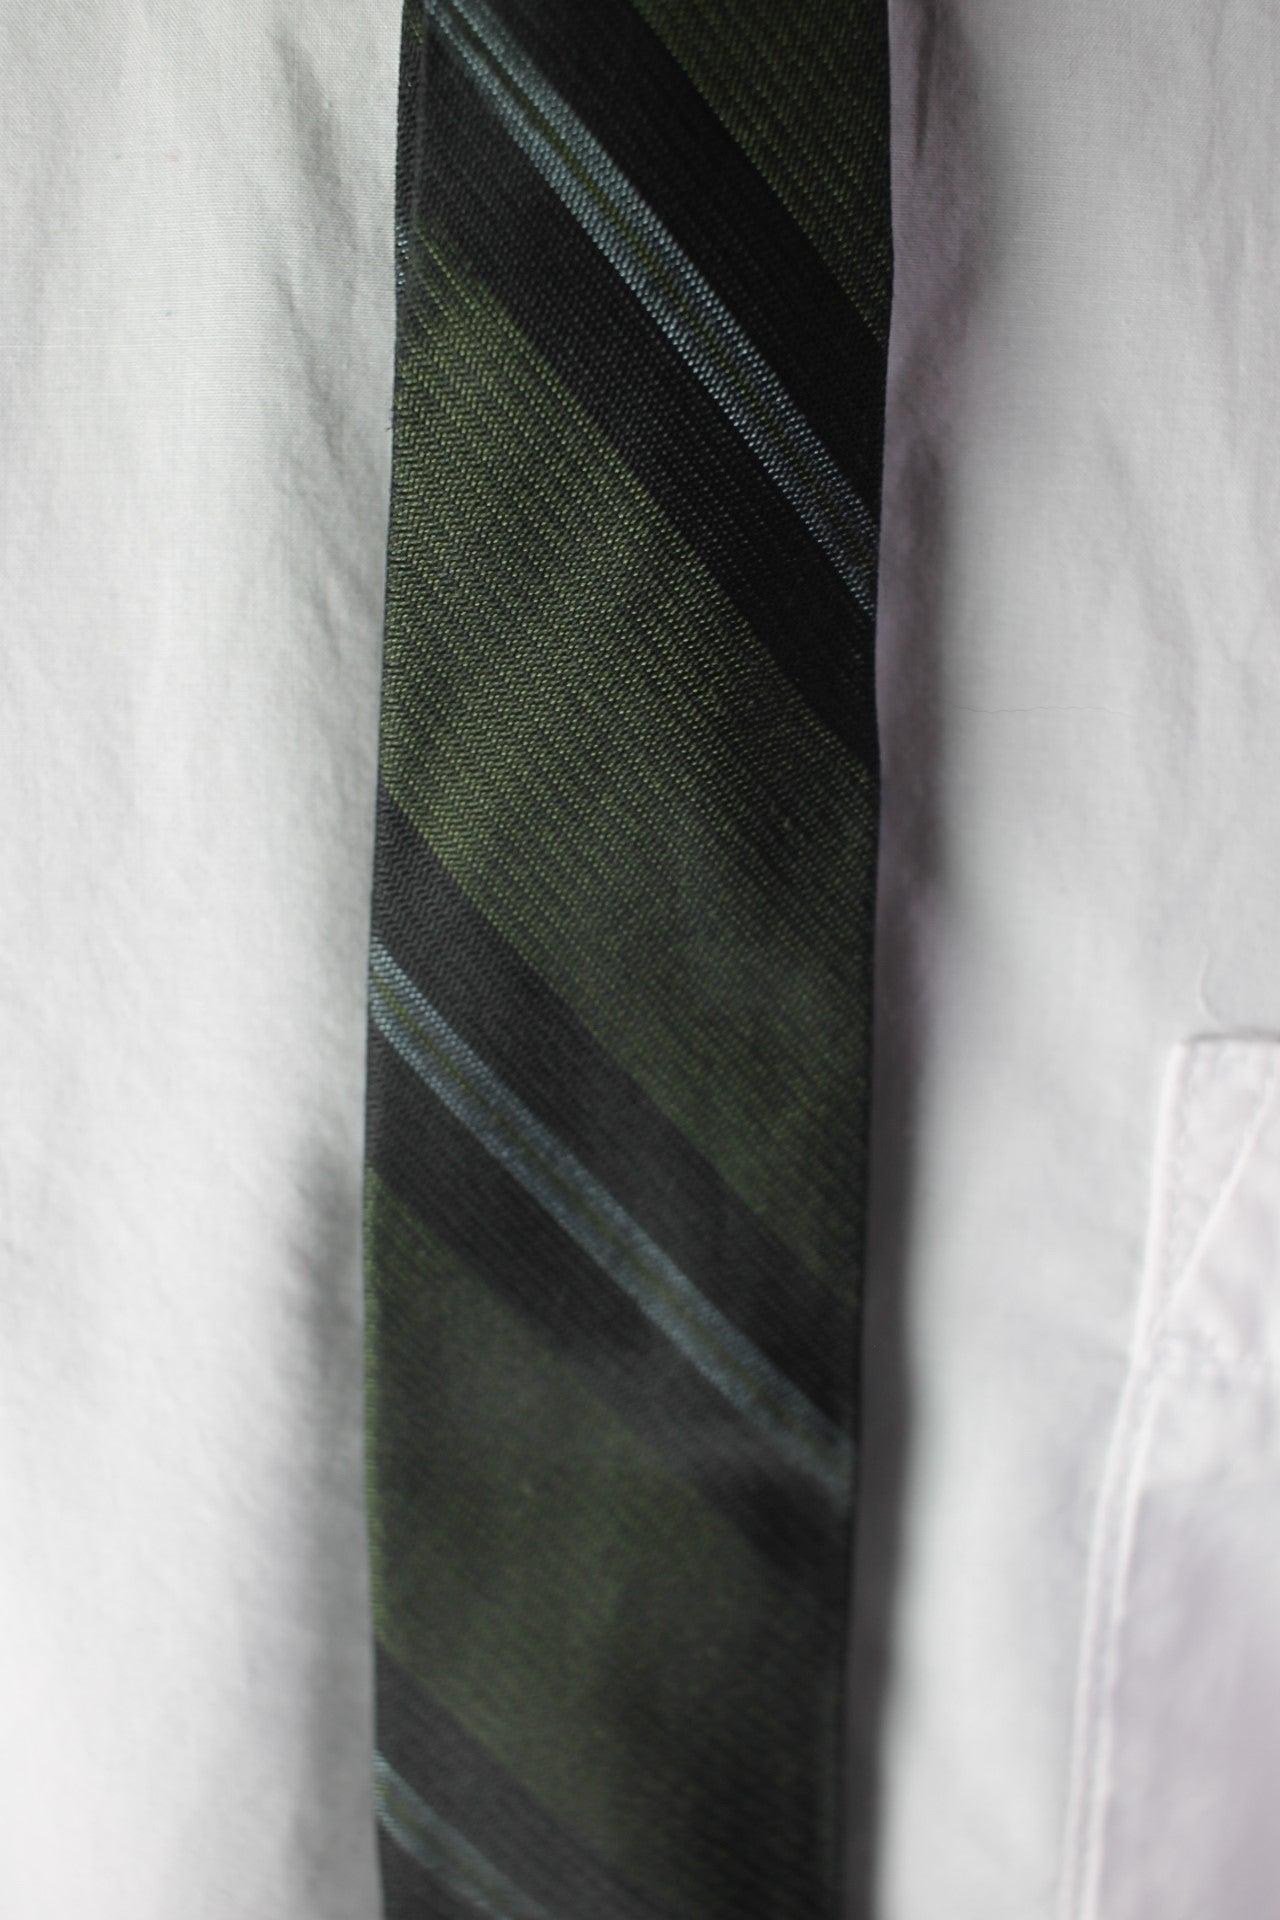 Vintage Arrow dark green black striped pattern skinny tie